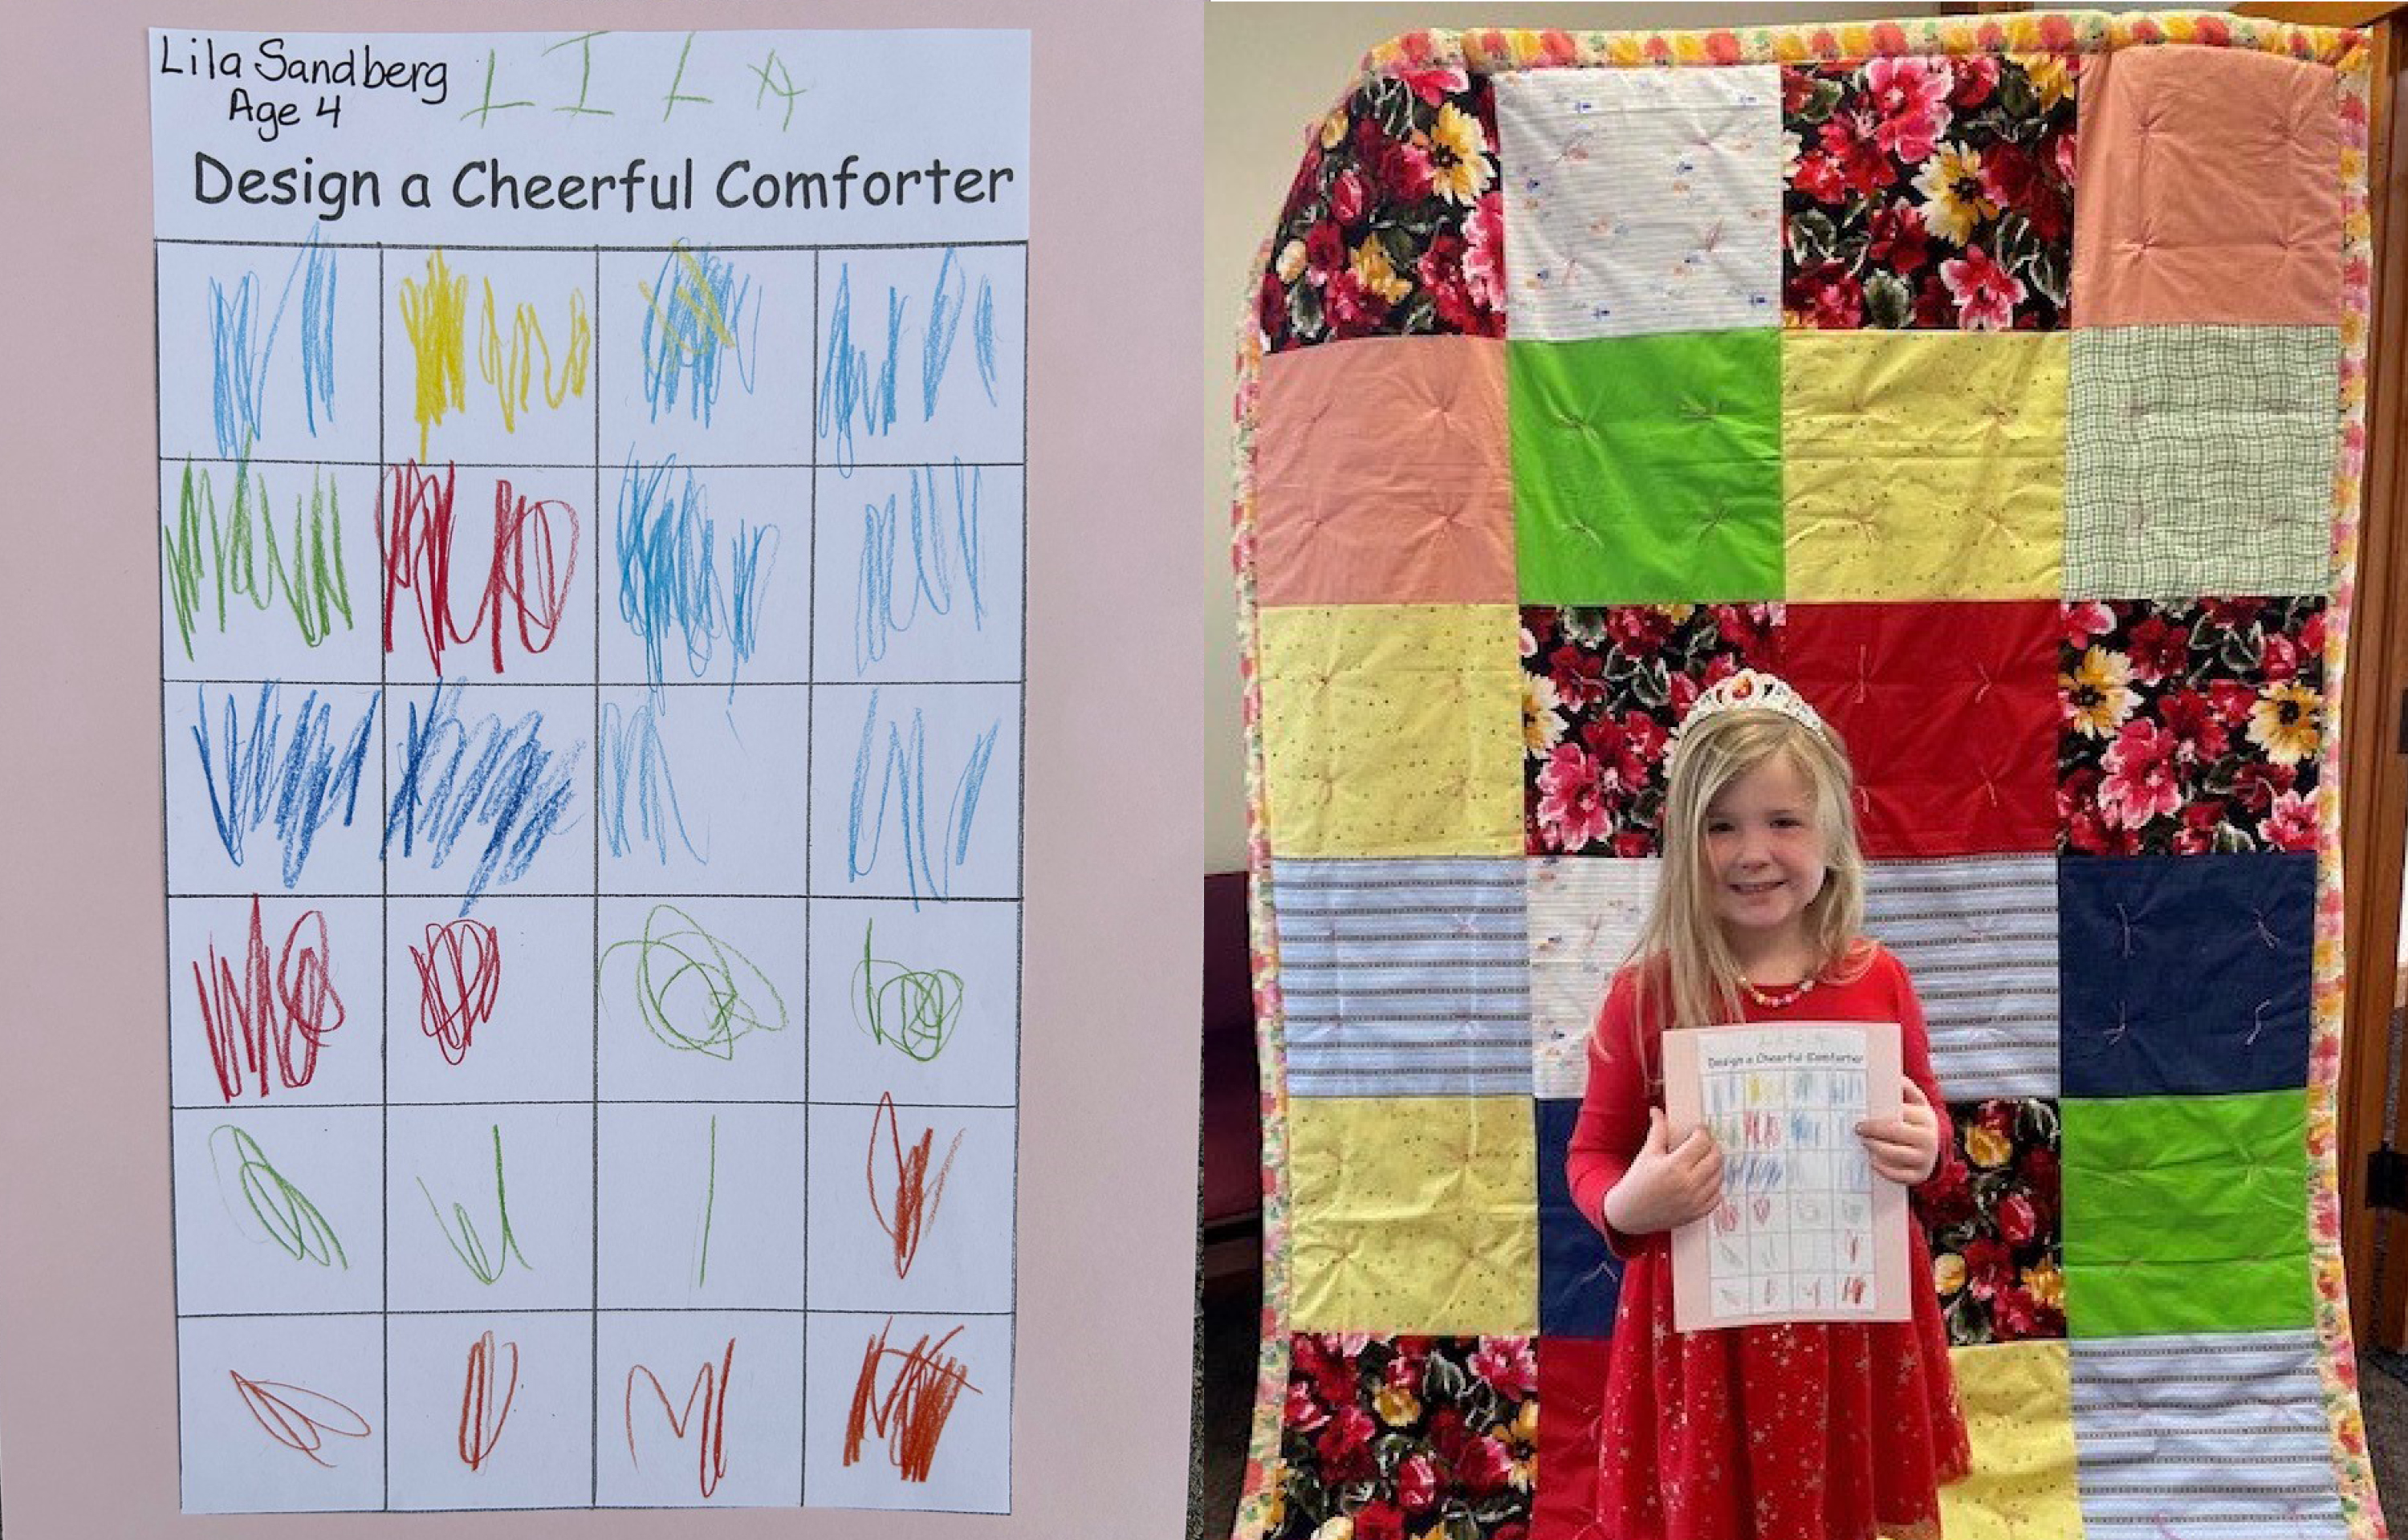 Lila presents her comforter design. 